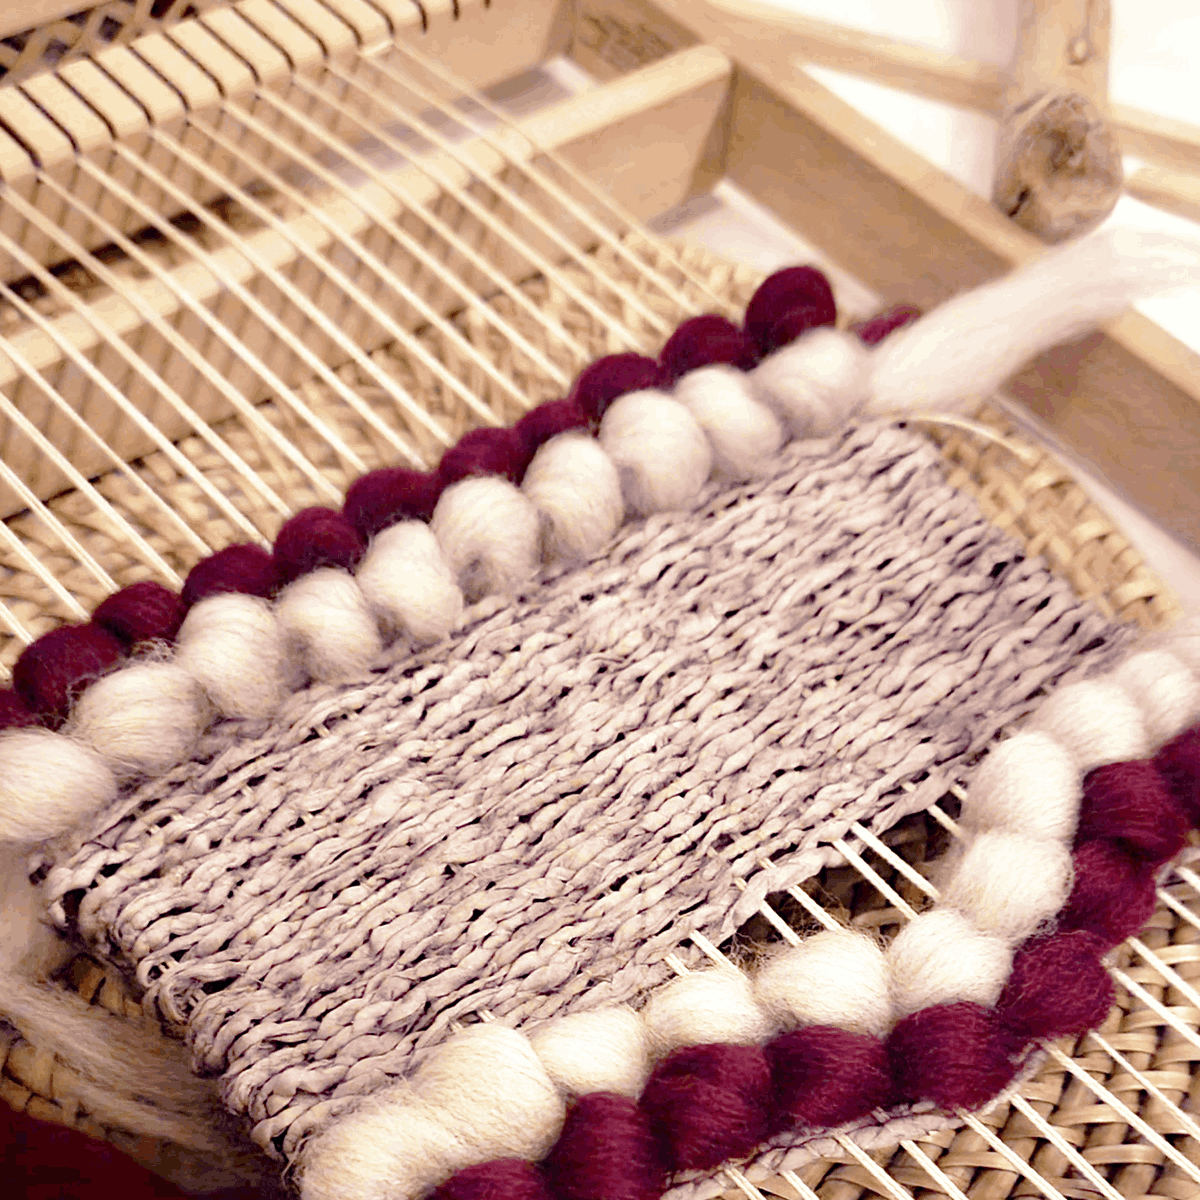 Weaving loom kit - Medium